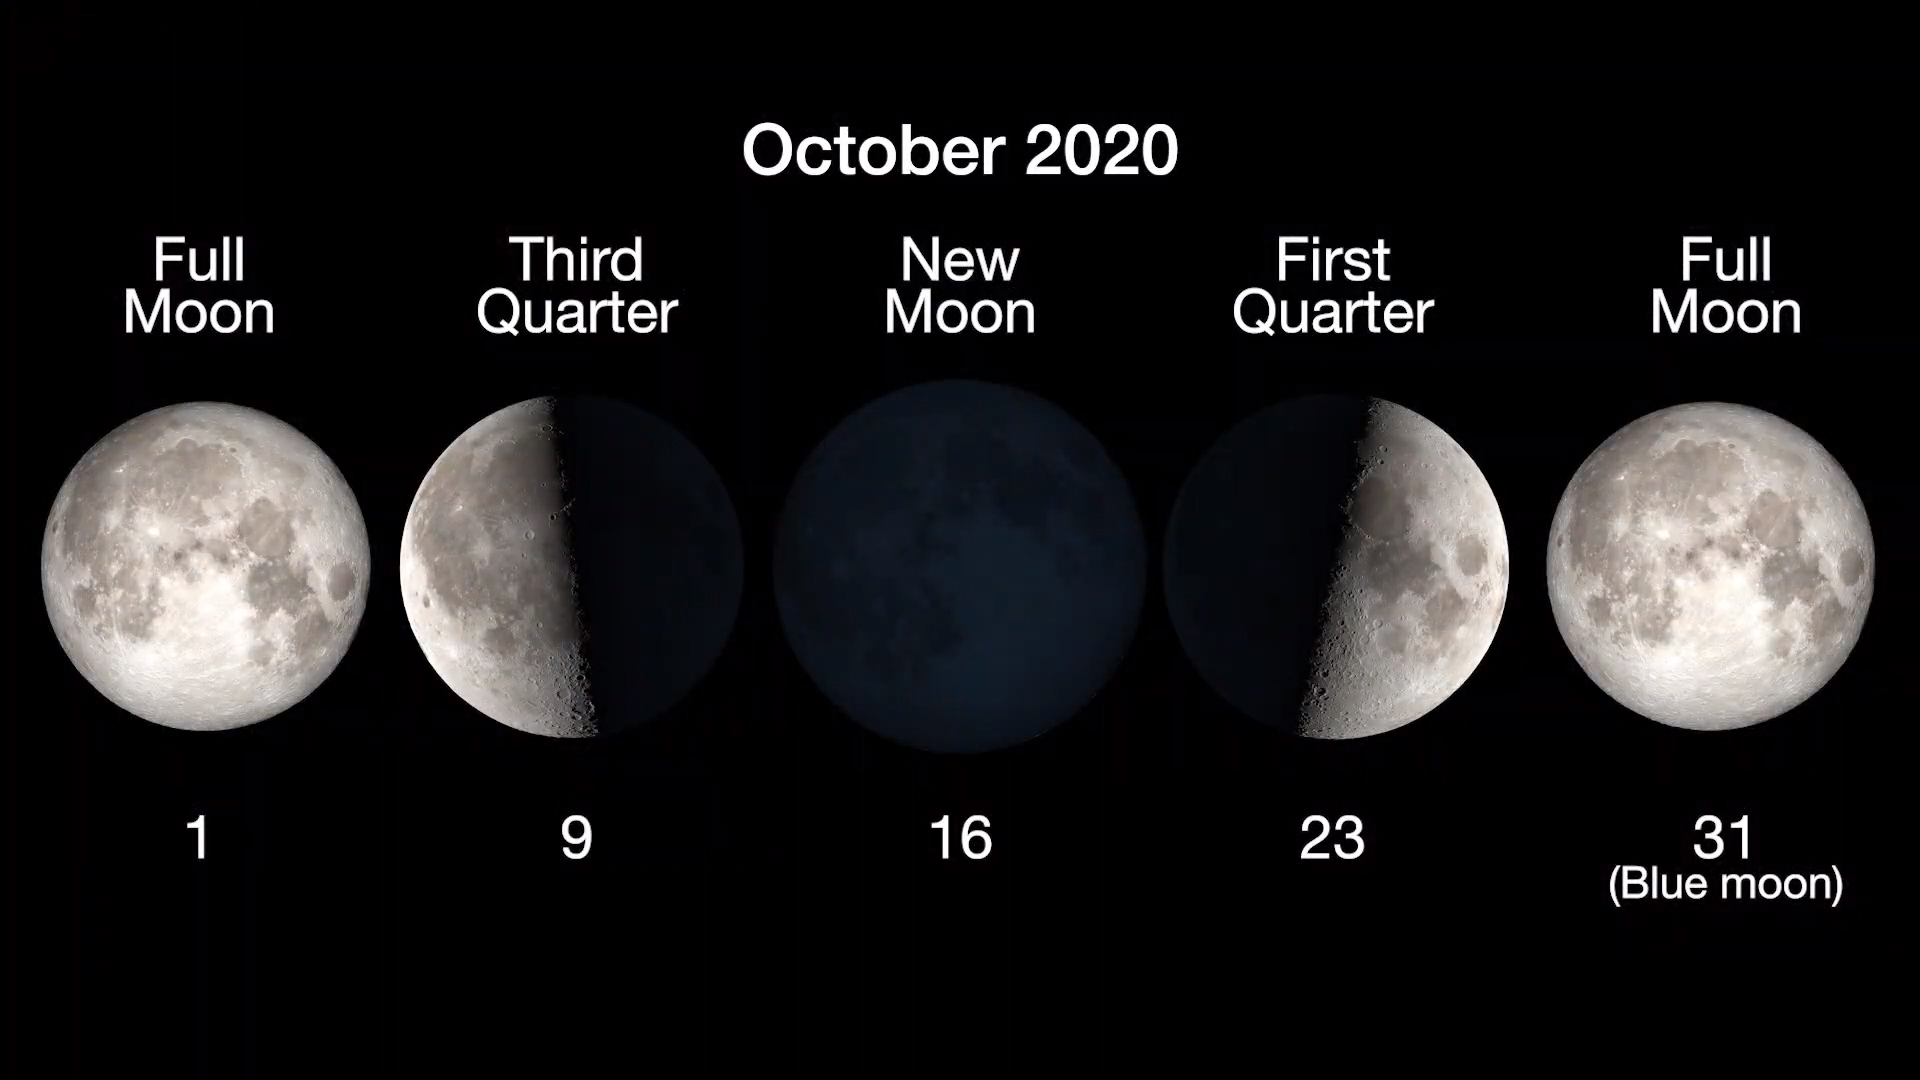 Lisa's World October 2020 Part II The Next Full Moon is a Halloween